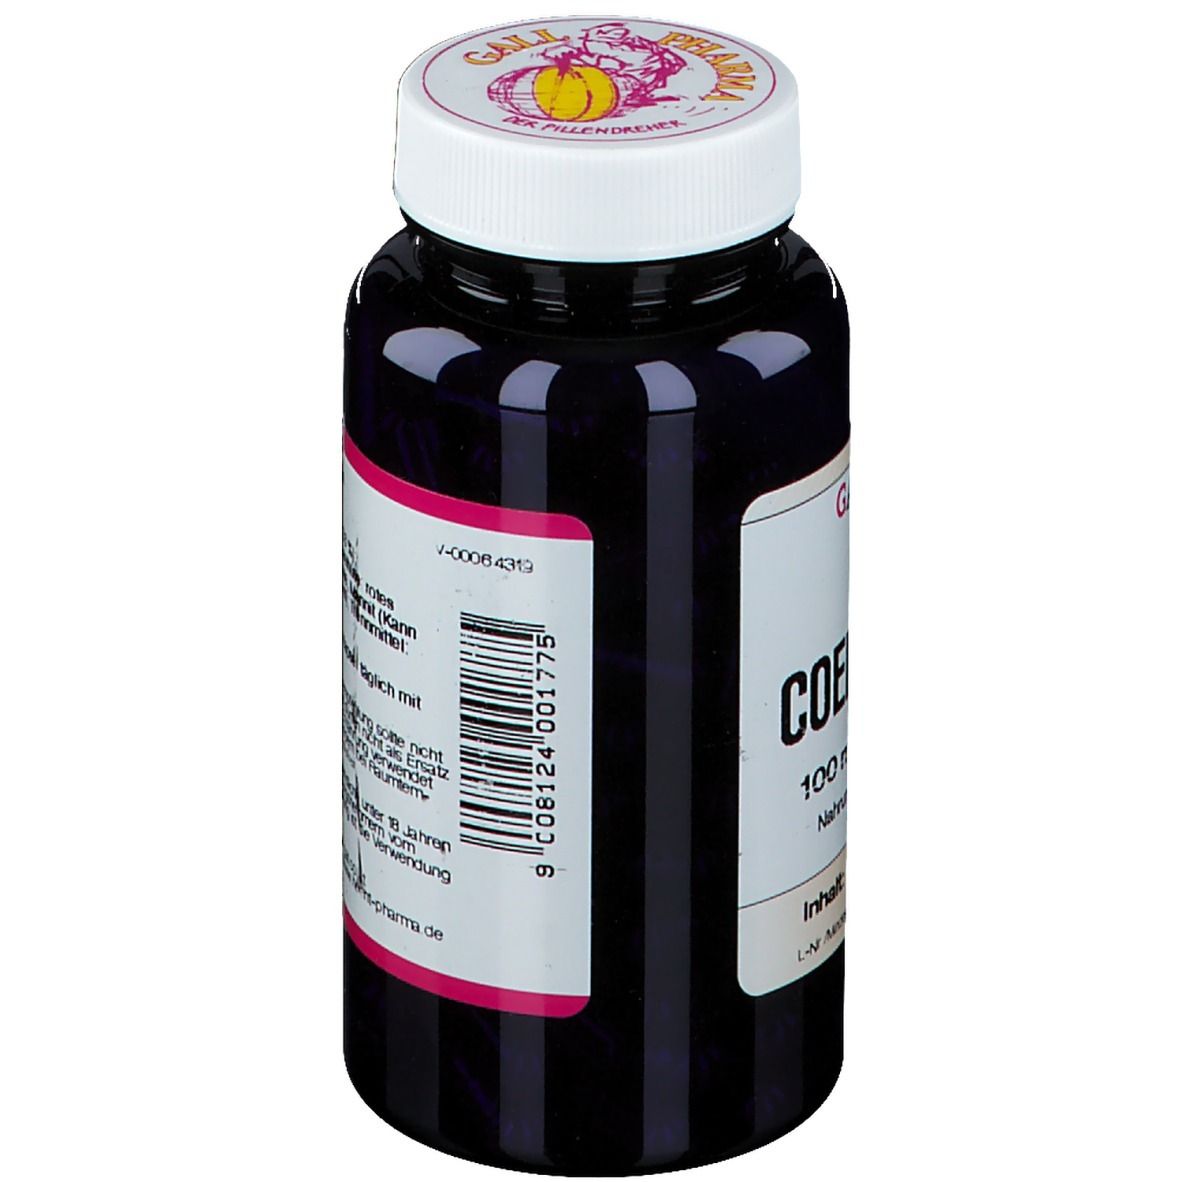 GALL PHARMA Coenzym Q-10 100 mg GPH Kapseln